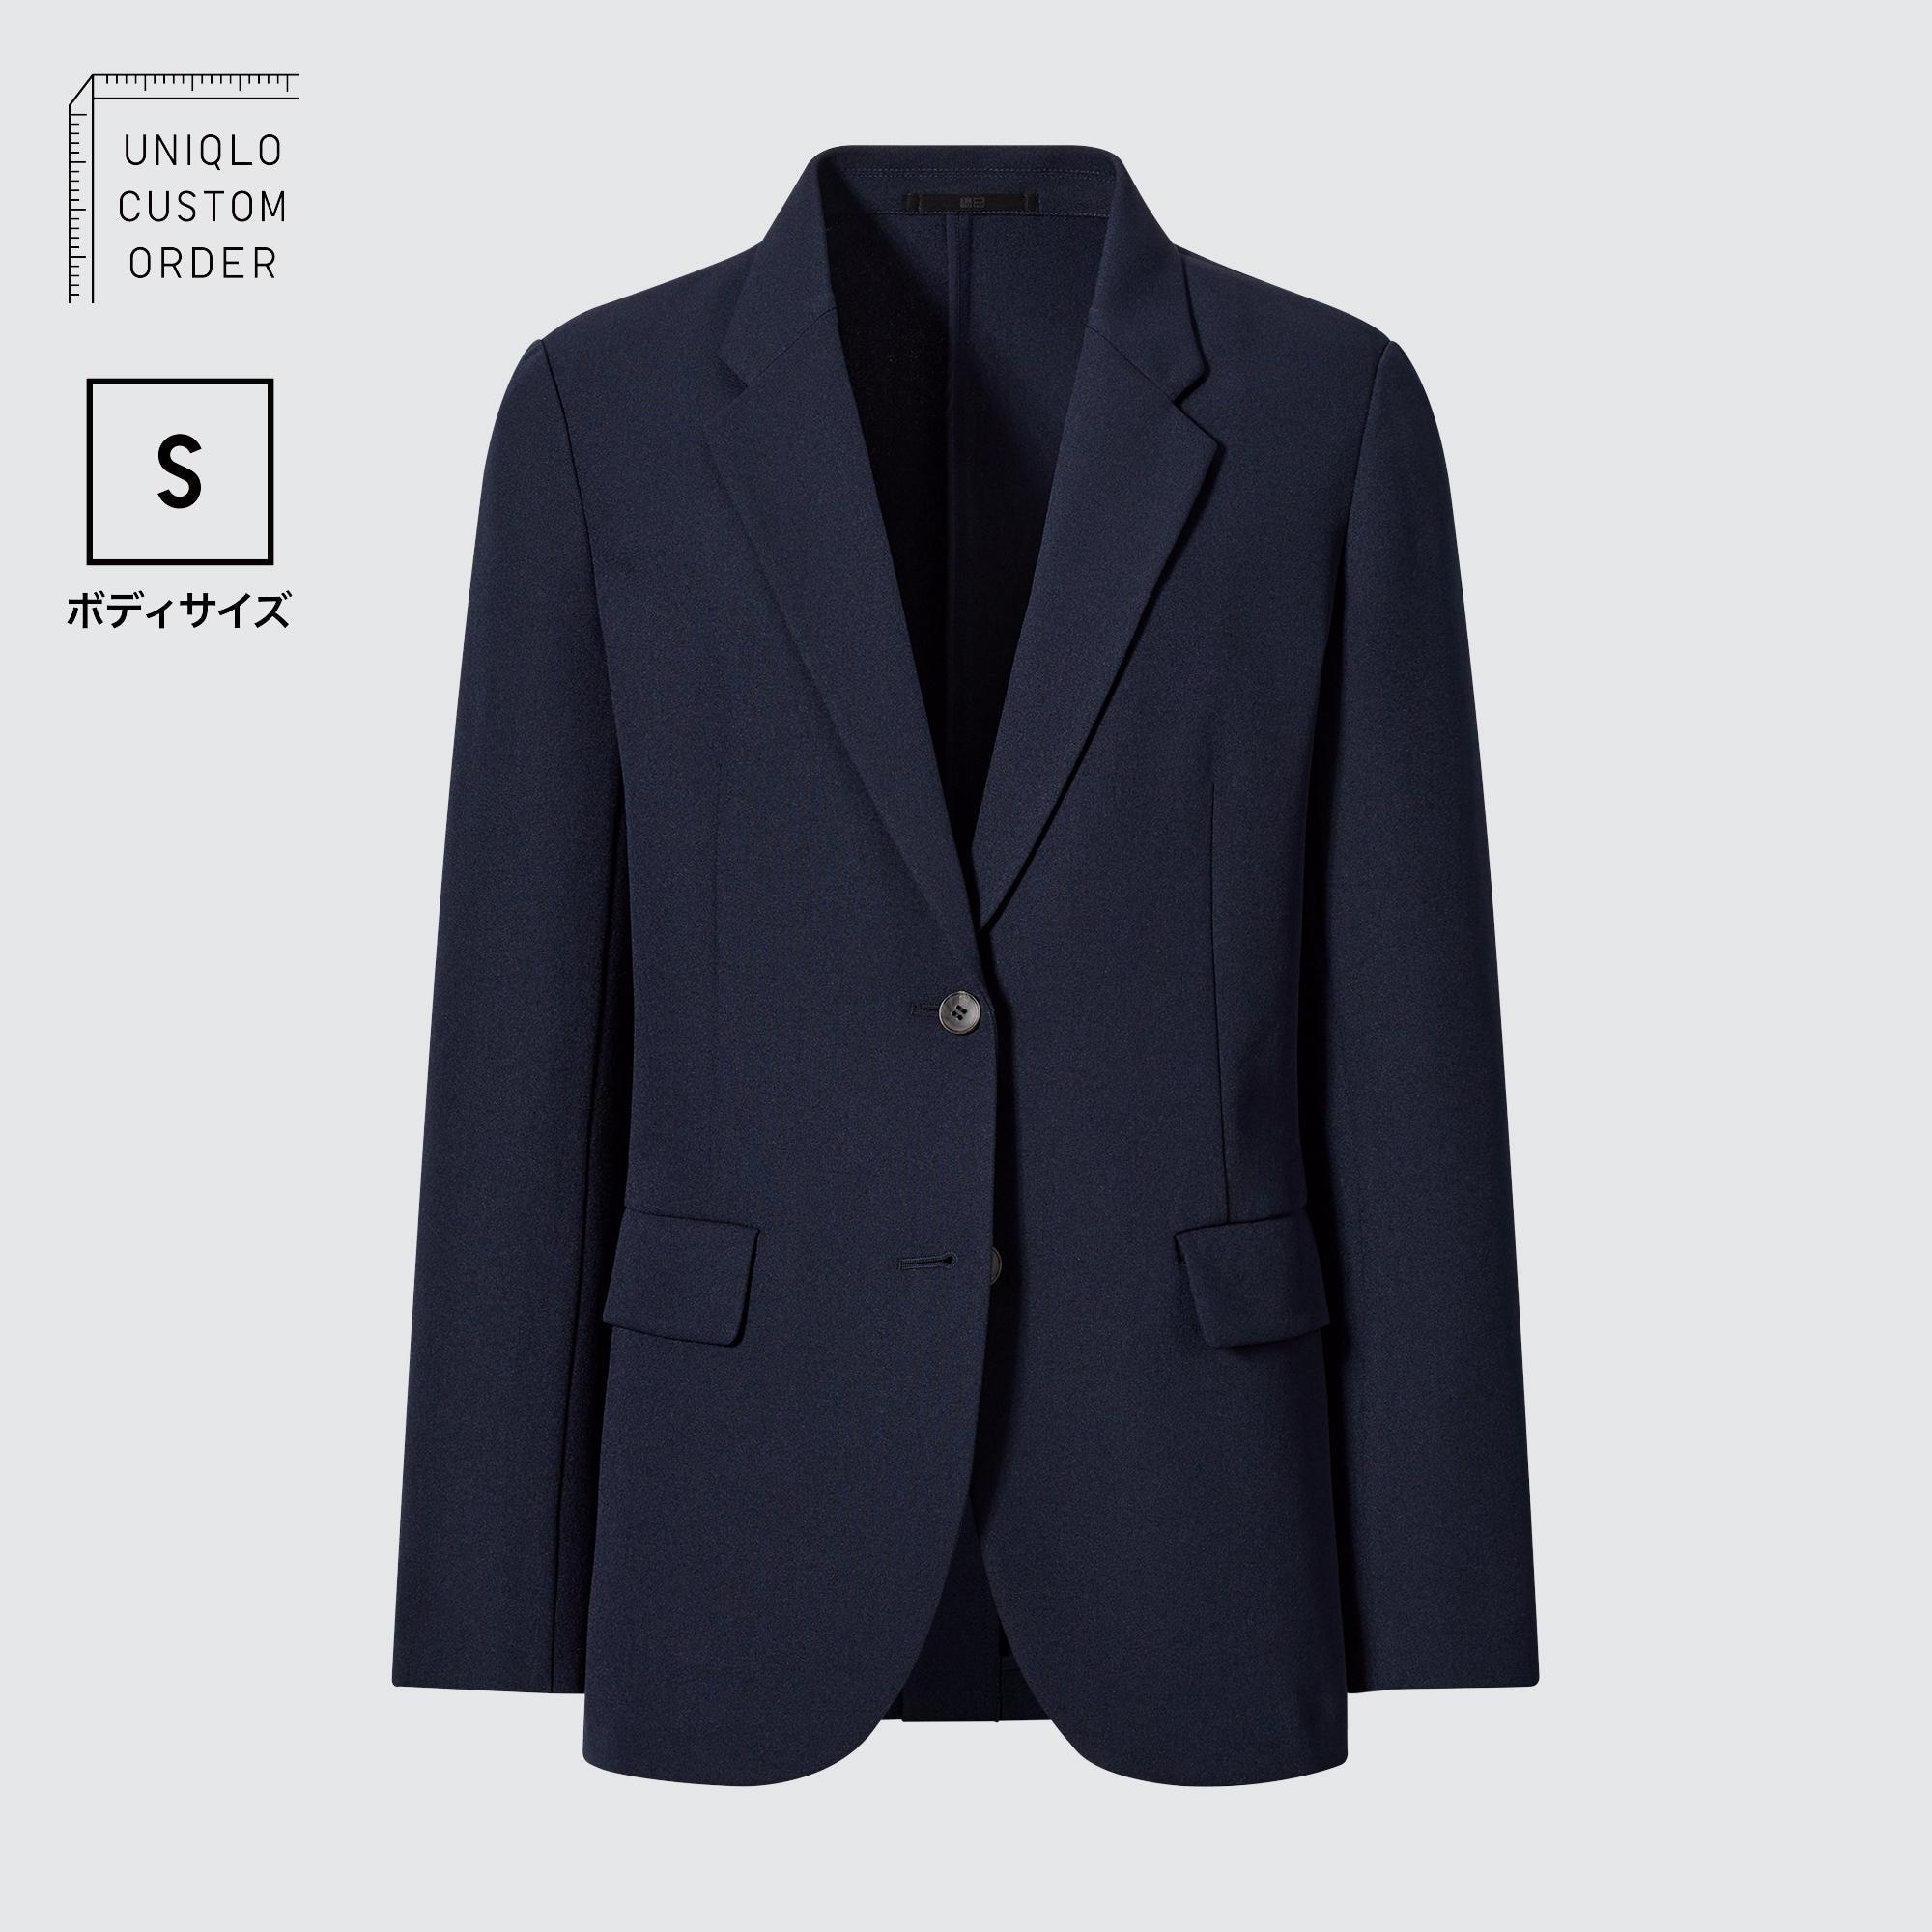 Куртка UNIQLO Кандо S, темно-синий цена и фото